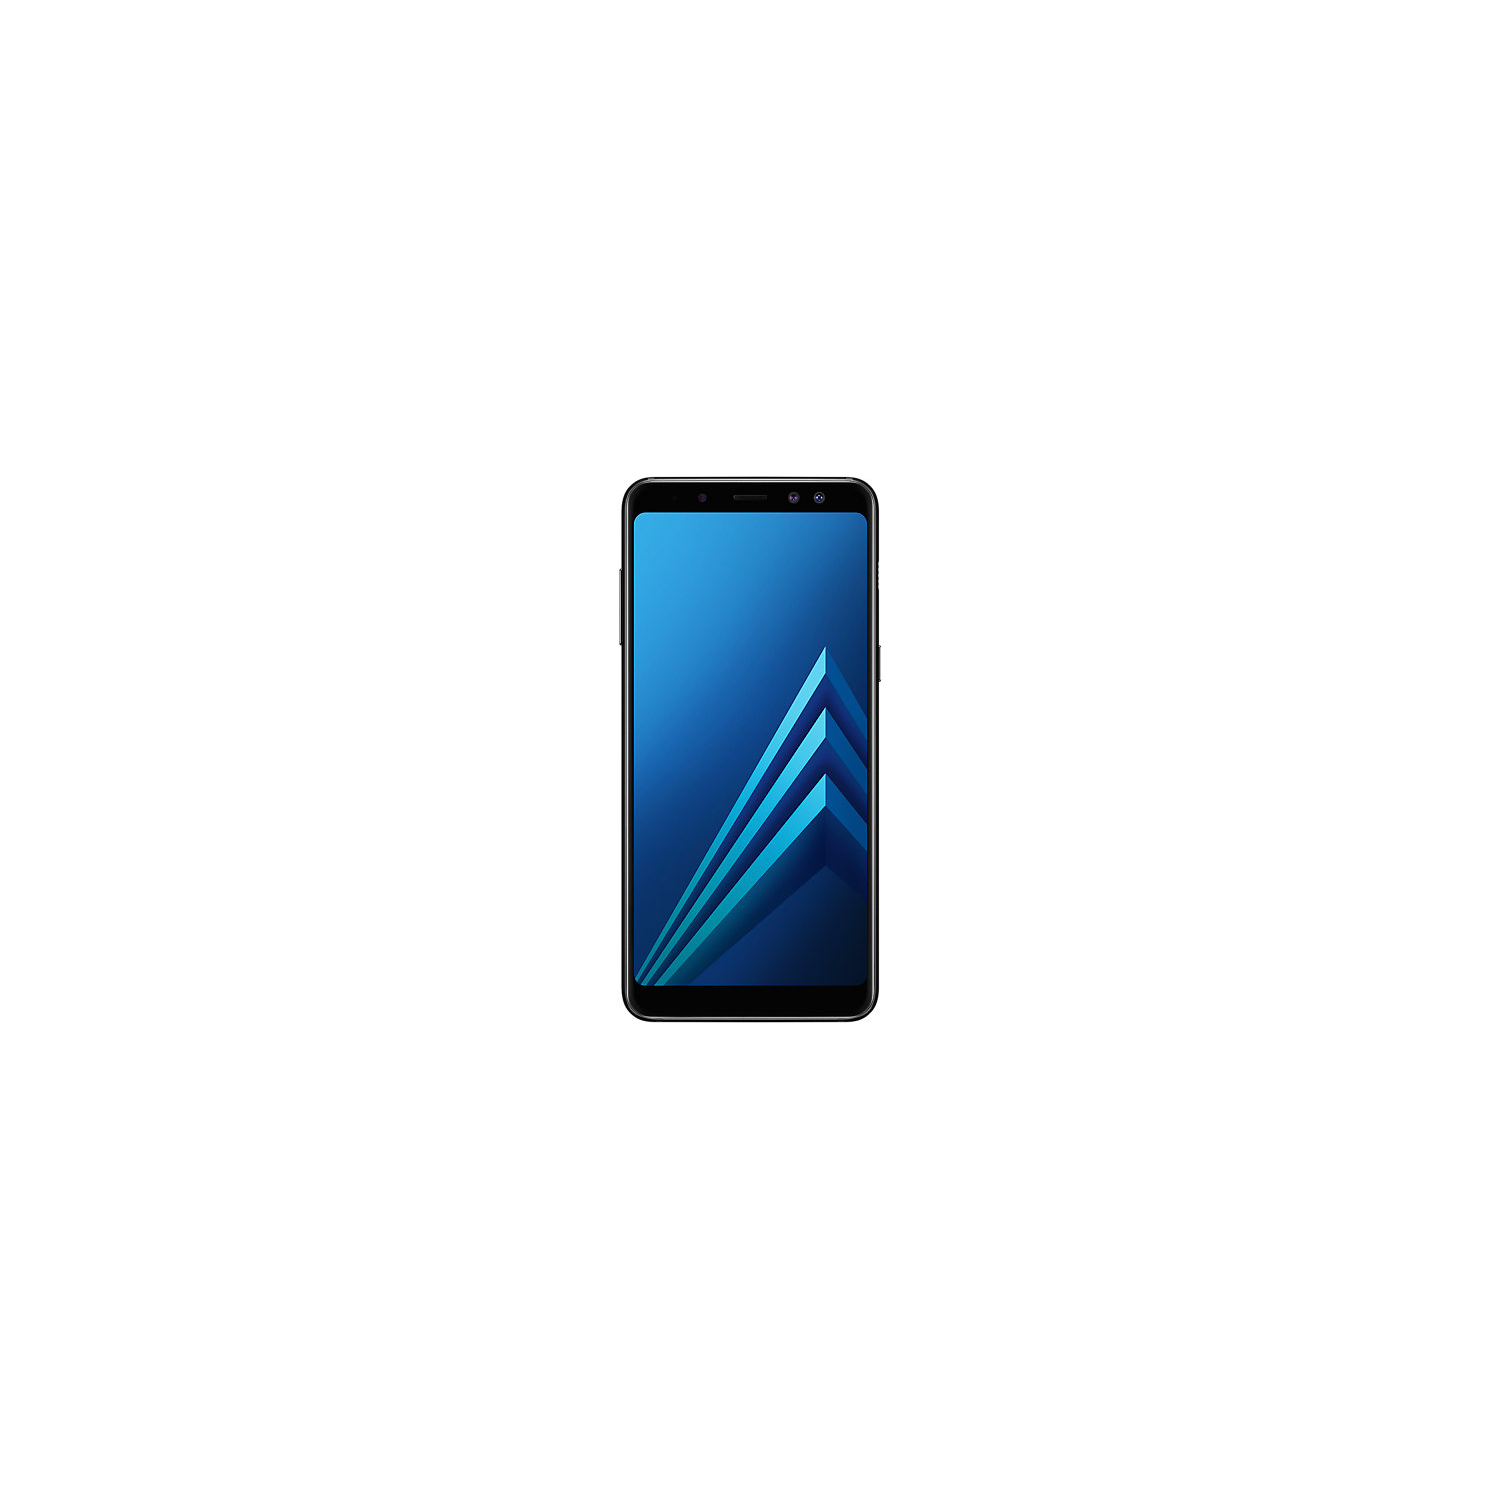 Refurbished (Good) - Samsung Galaxy A8 32GB Smartphone - Black - Unlocked